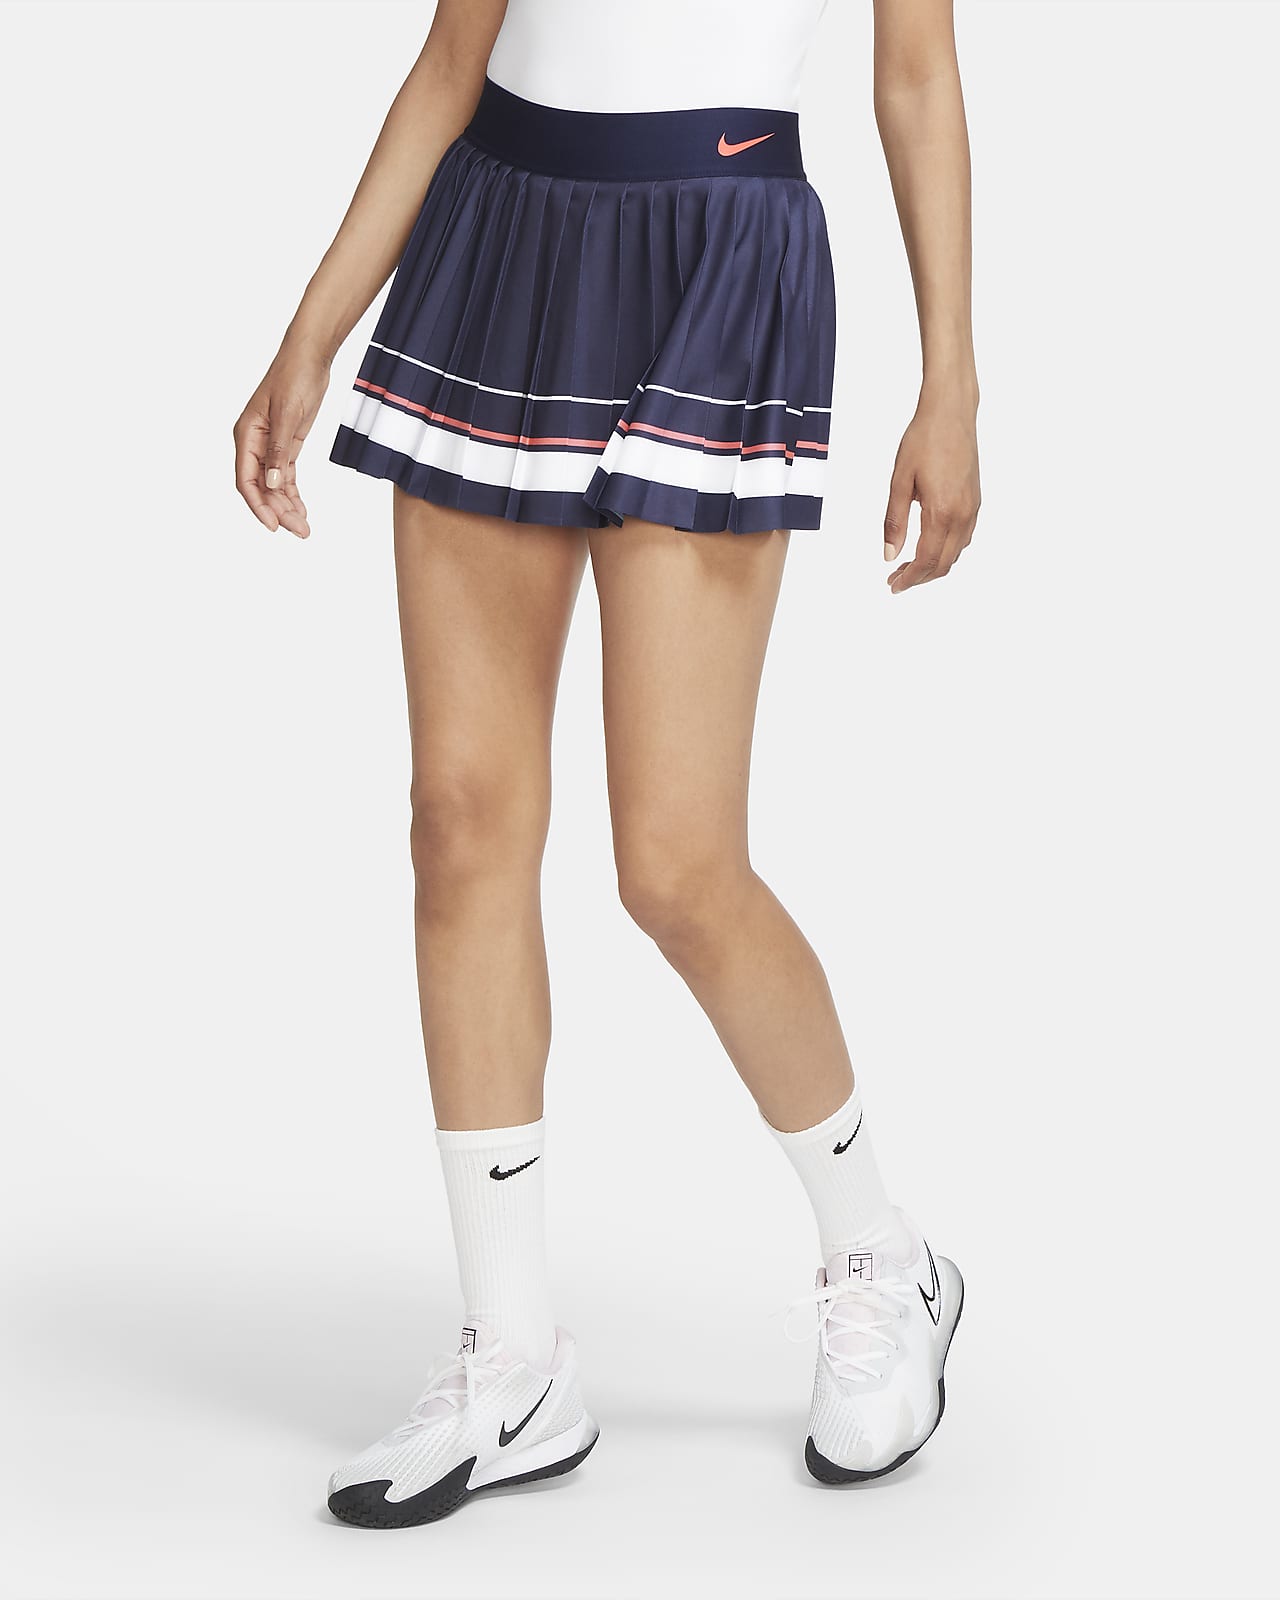 nike tennis skirt with leggings